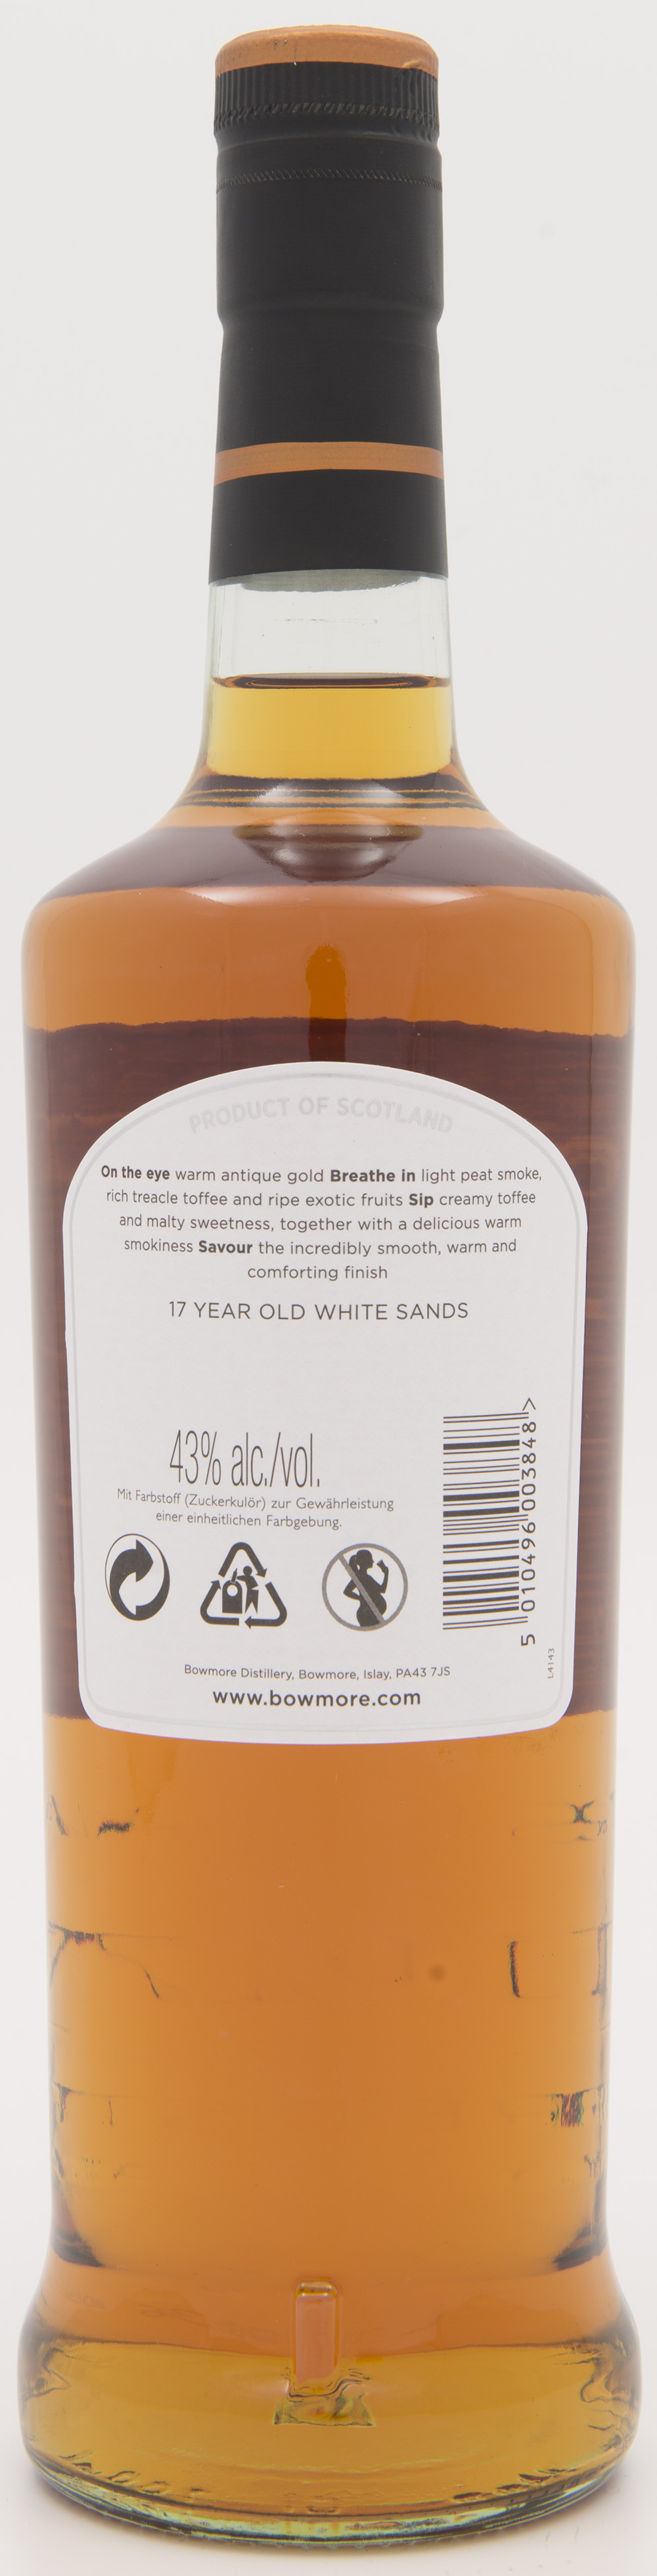 Billede: DSC_3849 Bowmore White Sands 17 - bottle back.jpg